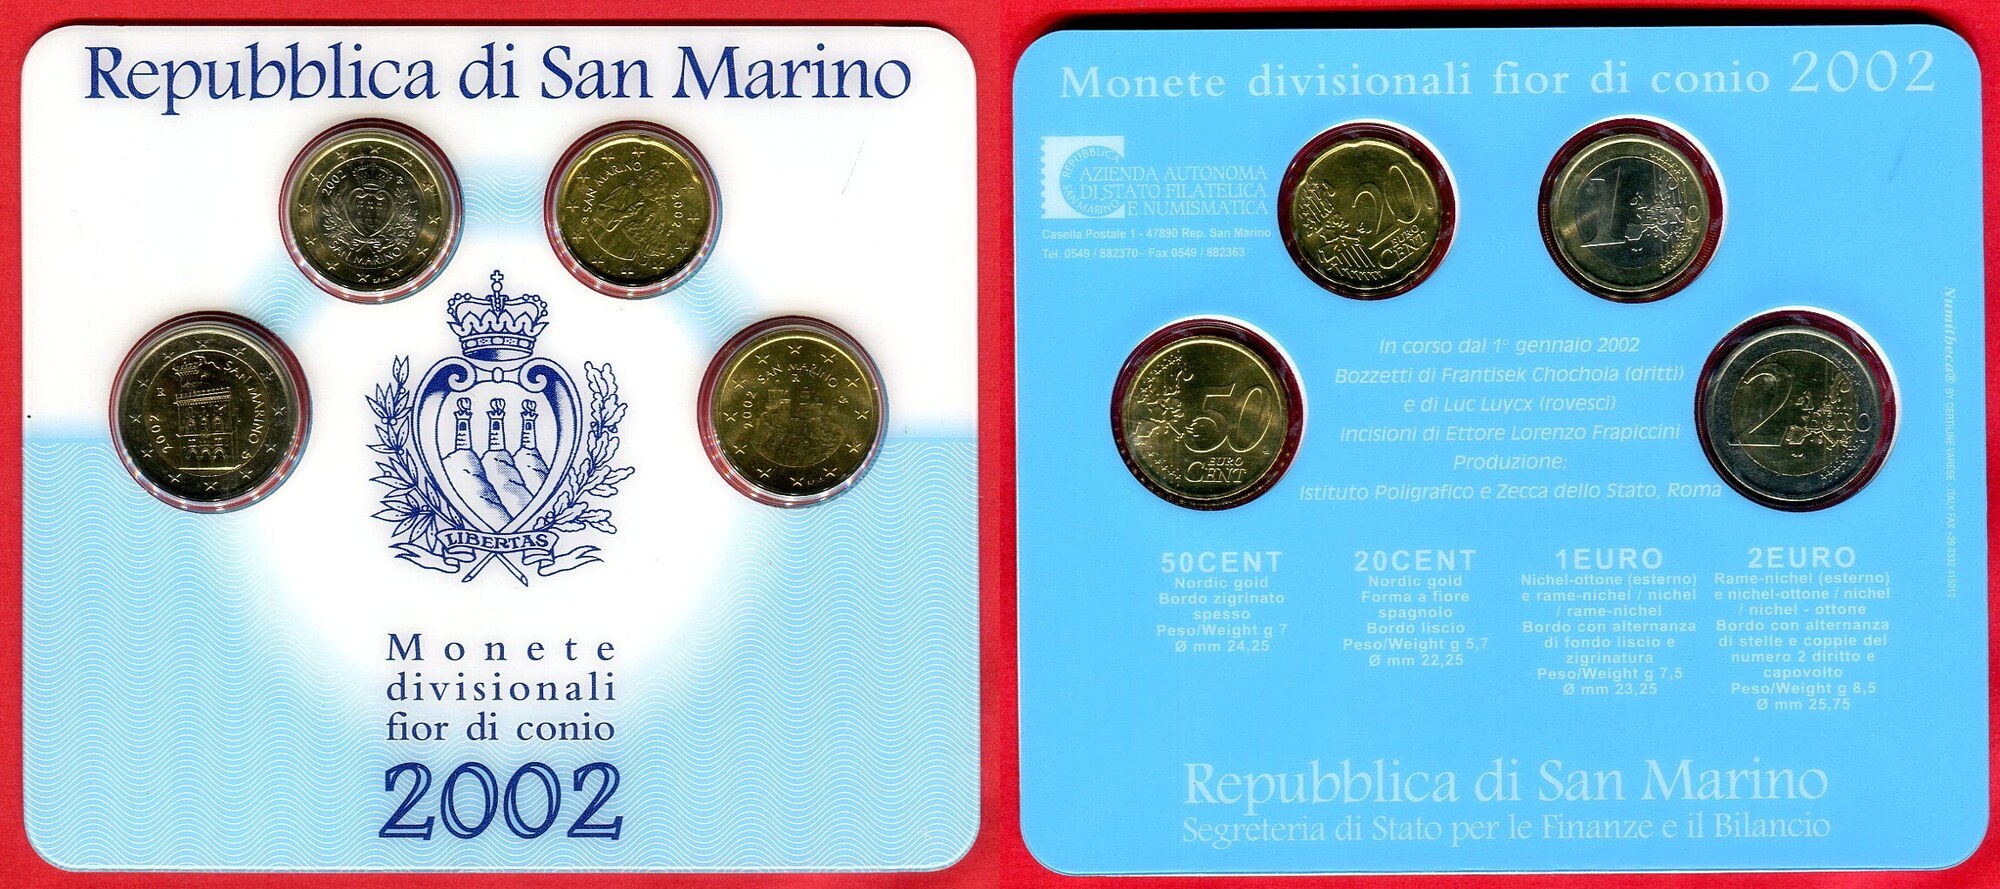 San Marino 2 €, 1 €, 50 Cent, 20 Cent 2002 Mini Kit, Coincard, unc in  blister